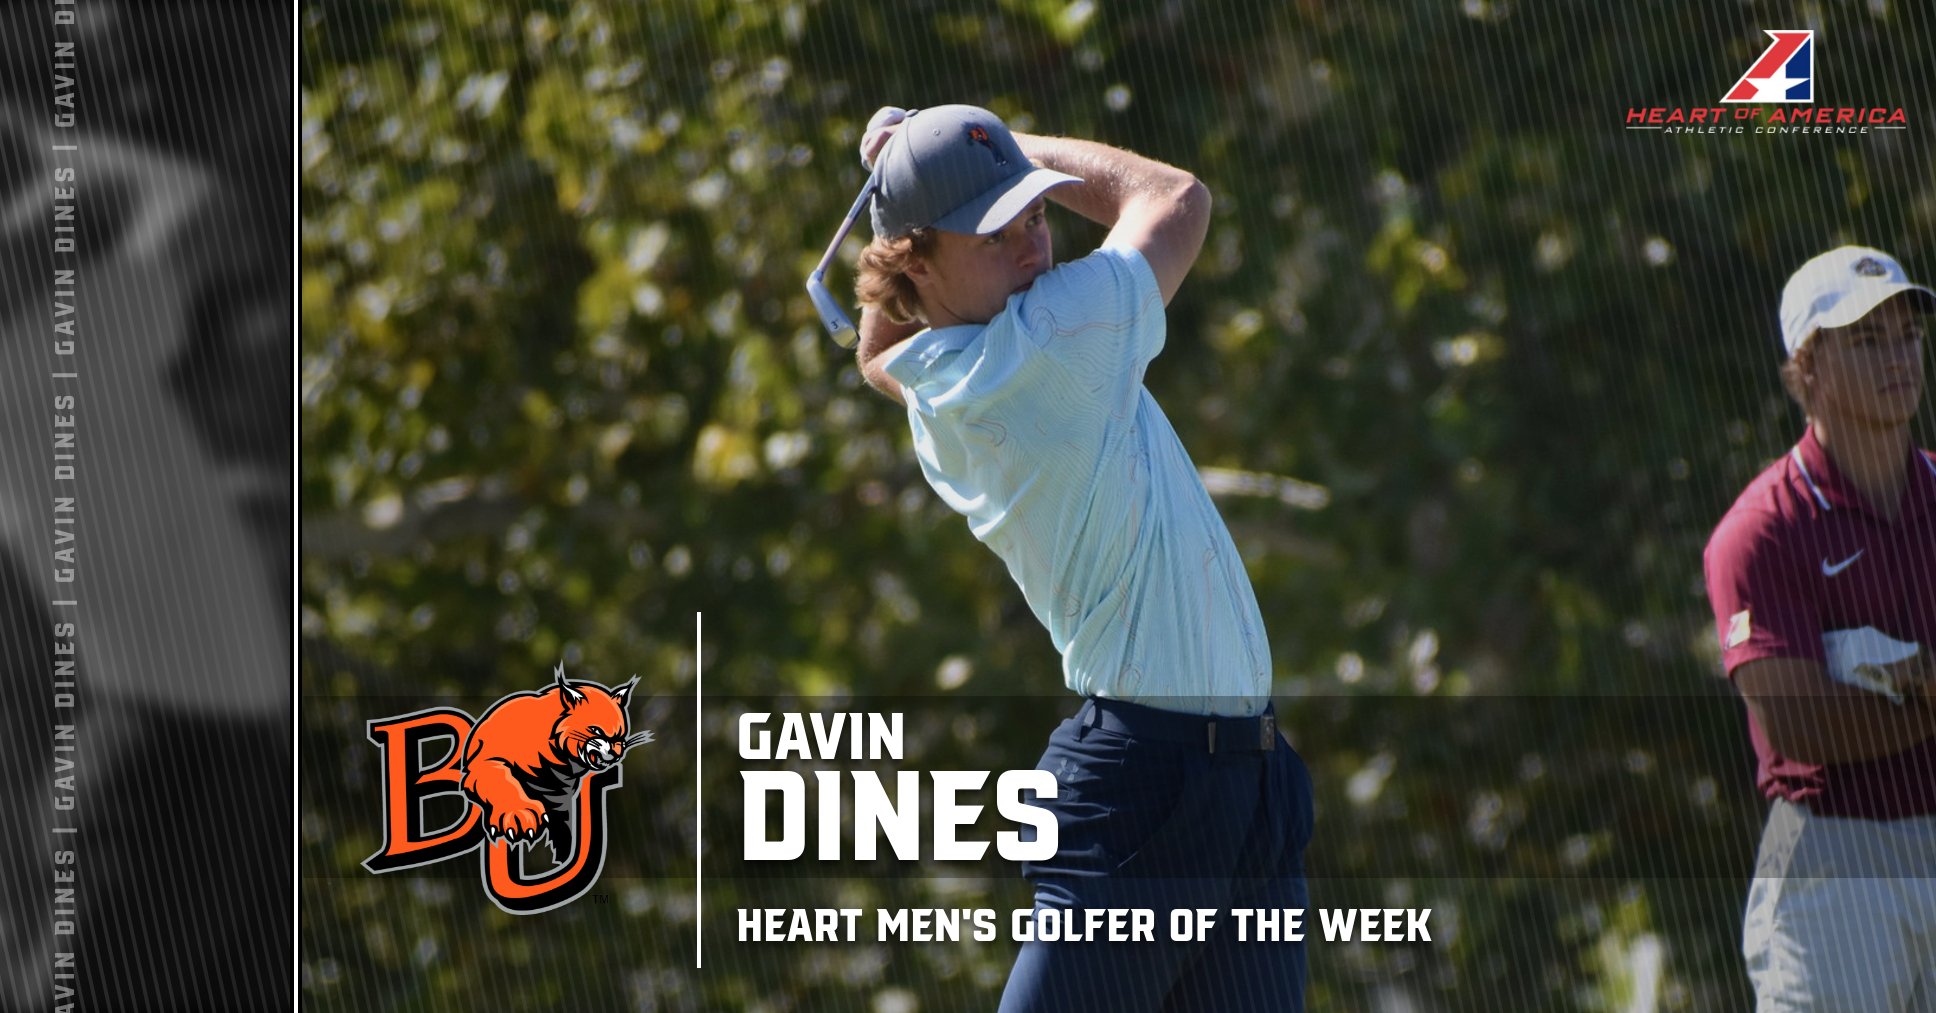 Dines Named Heart Men’s Golfer of the Week